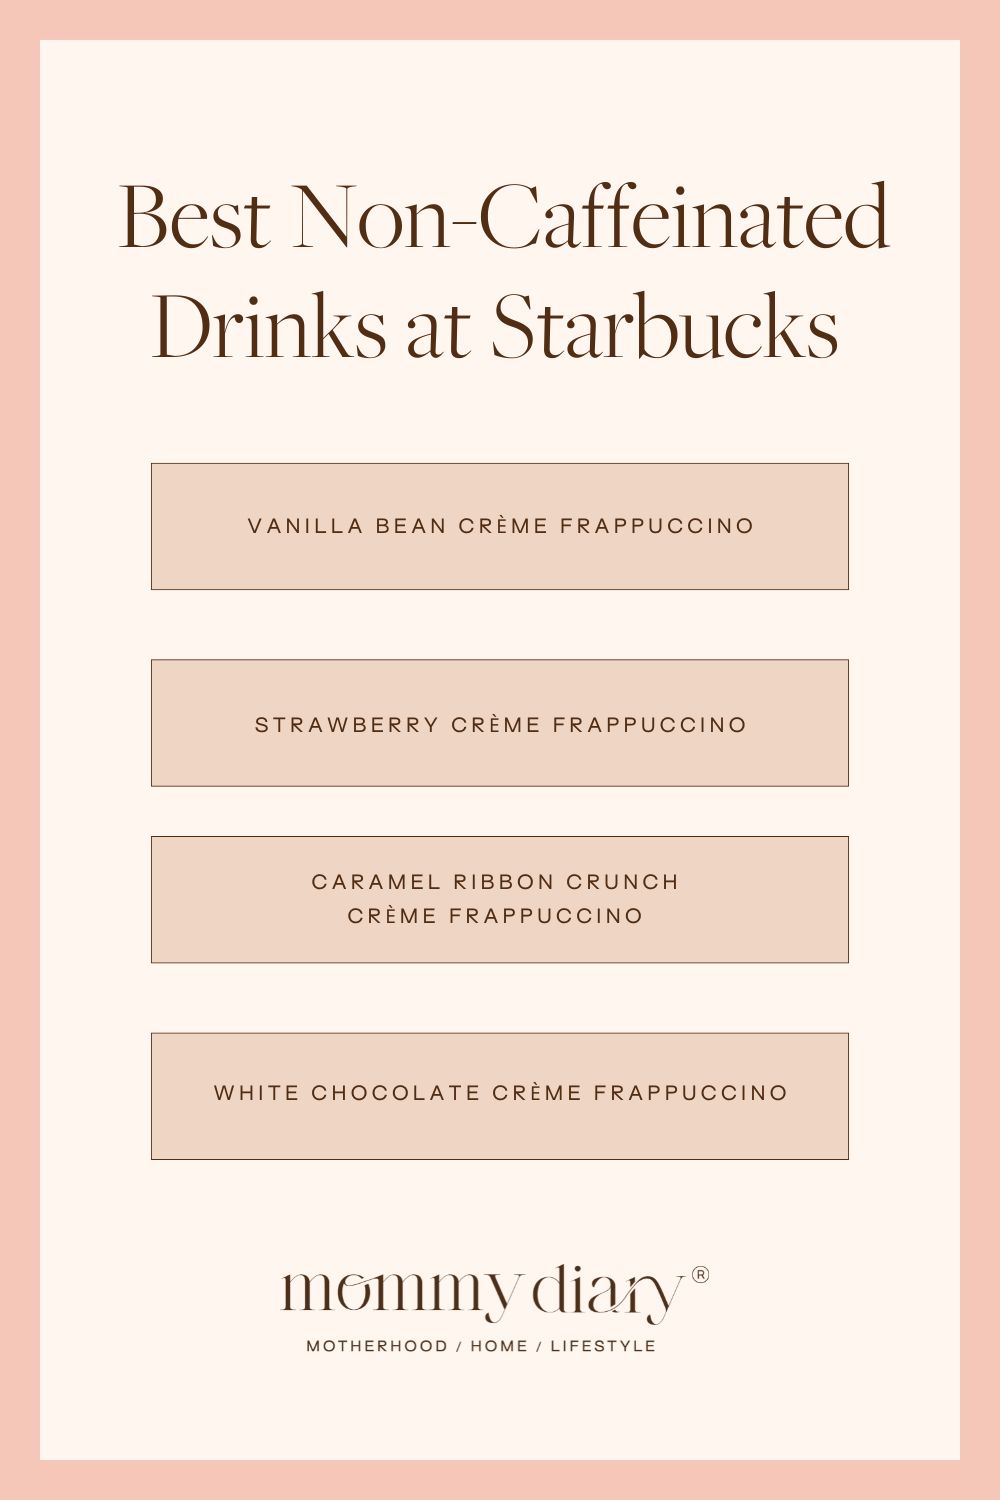 Best Non-Caffeinated Drinks at Starbucks